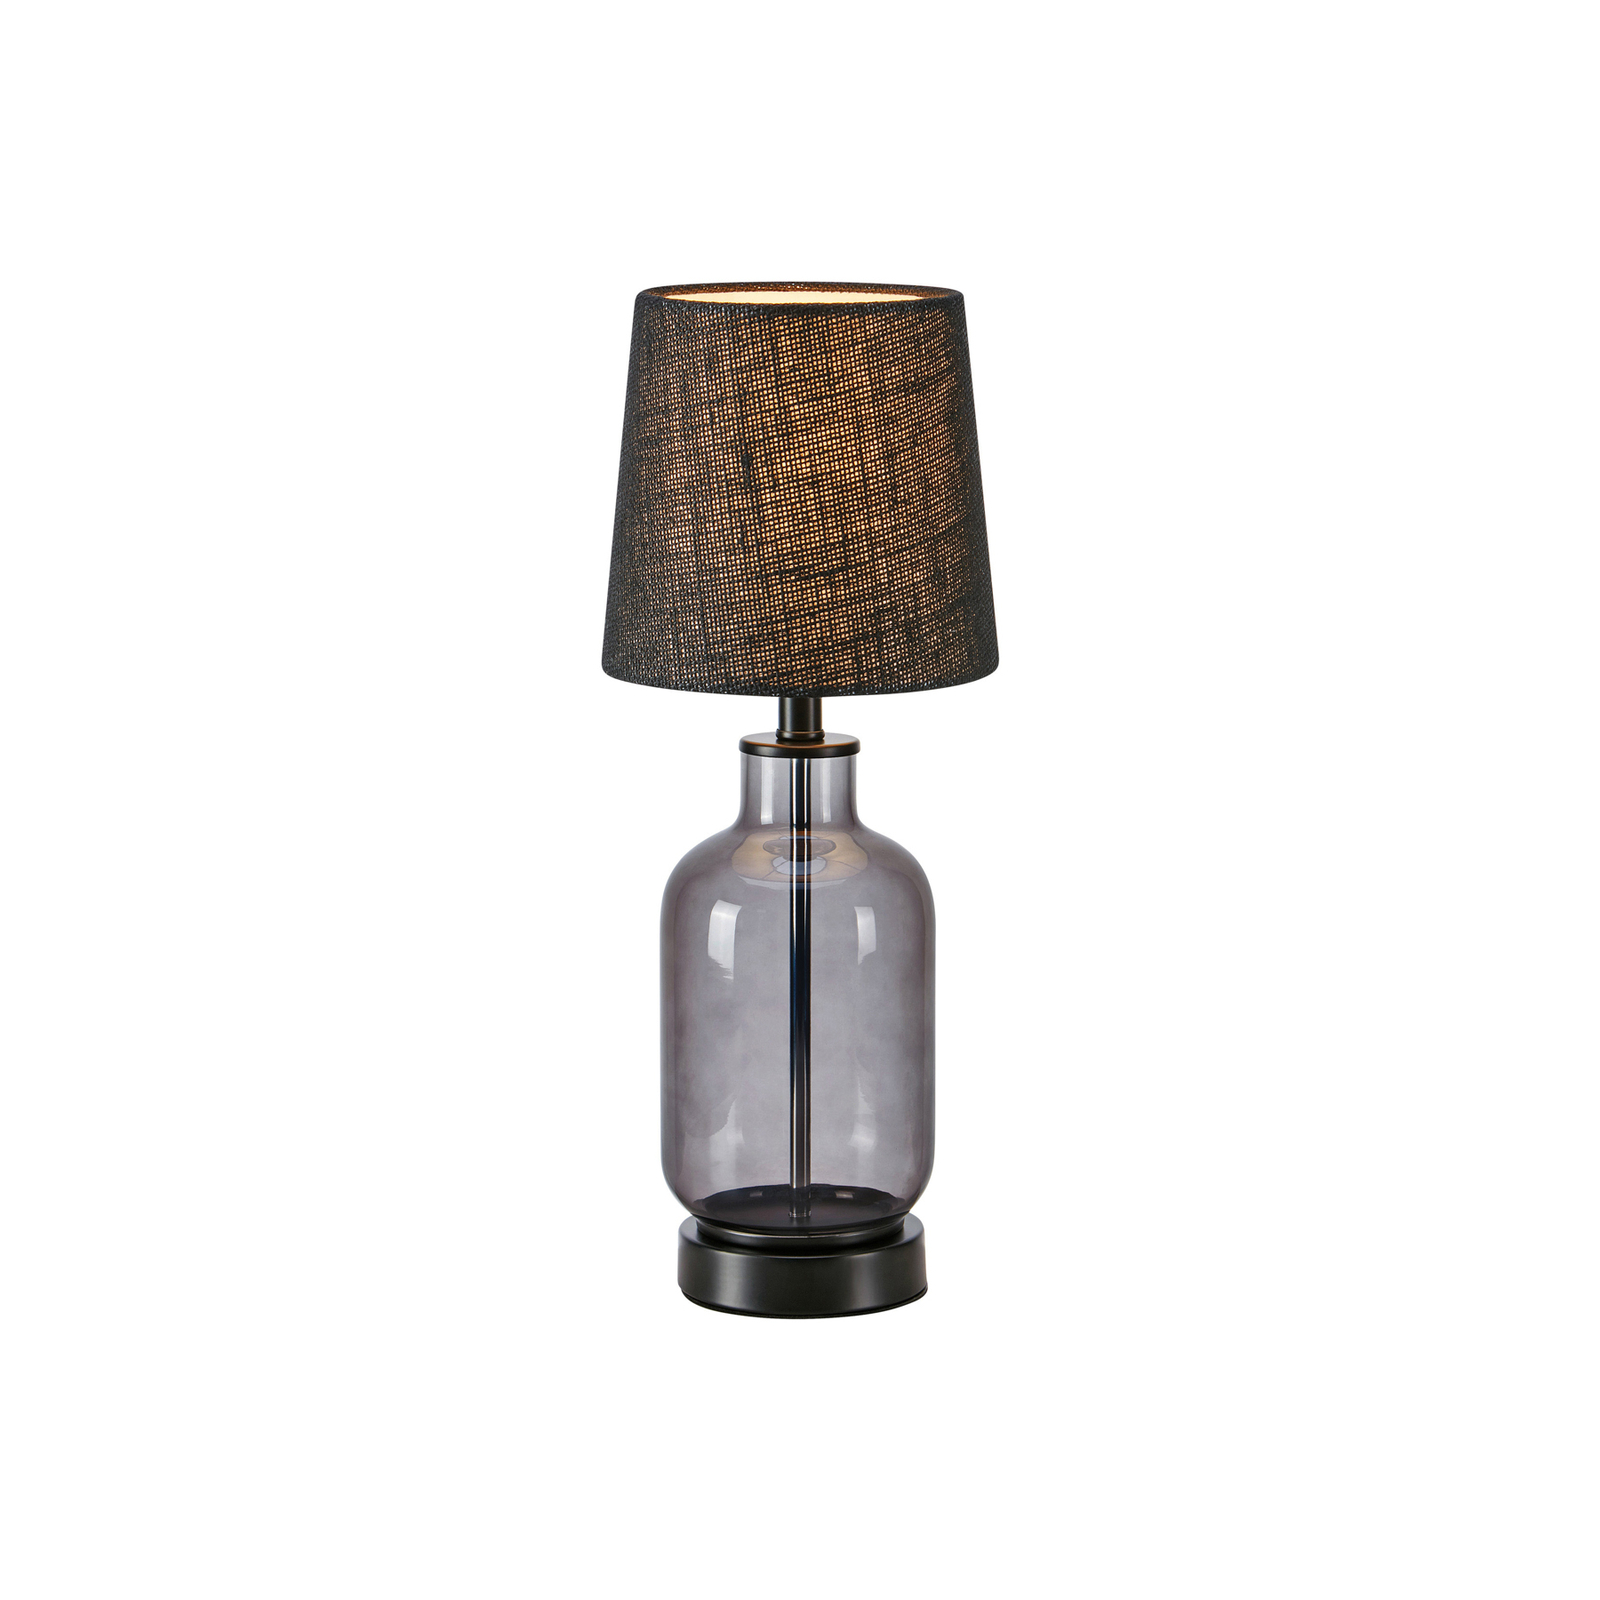 Costero bordslampa, rökgrå/svart, 43 cm